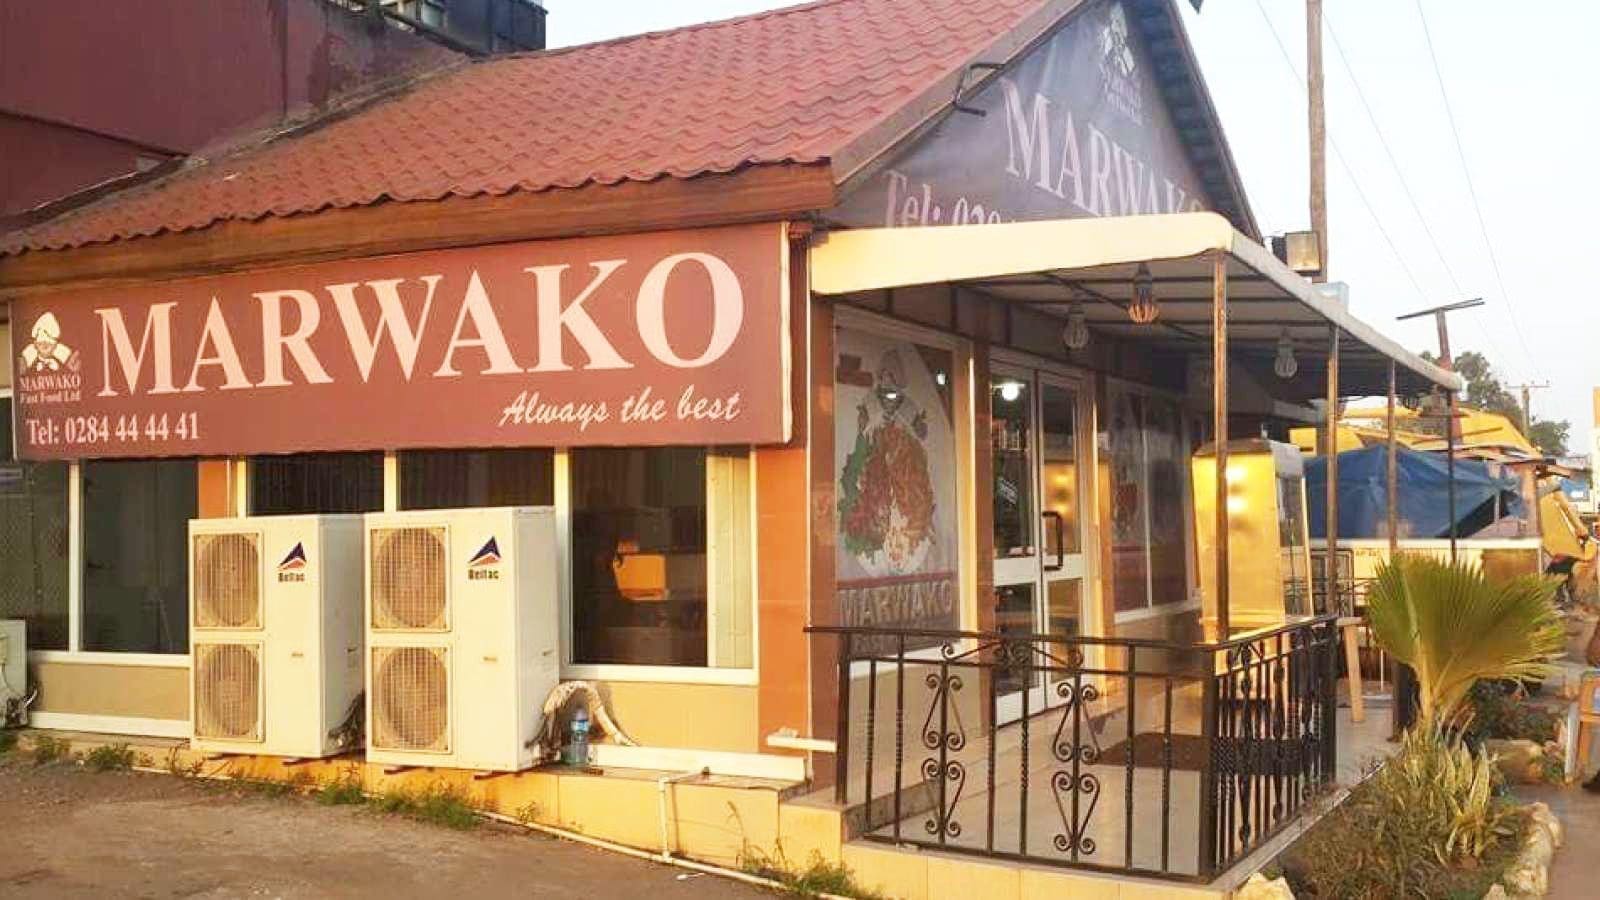 FDA Ghana confirms food poisoning allegations at Marwako restaurant